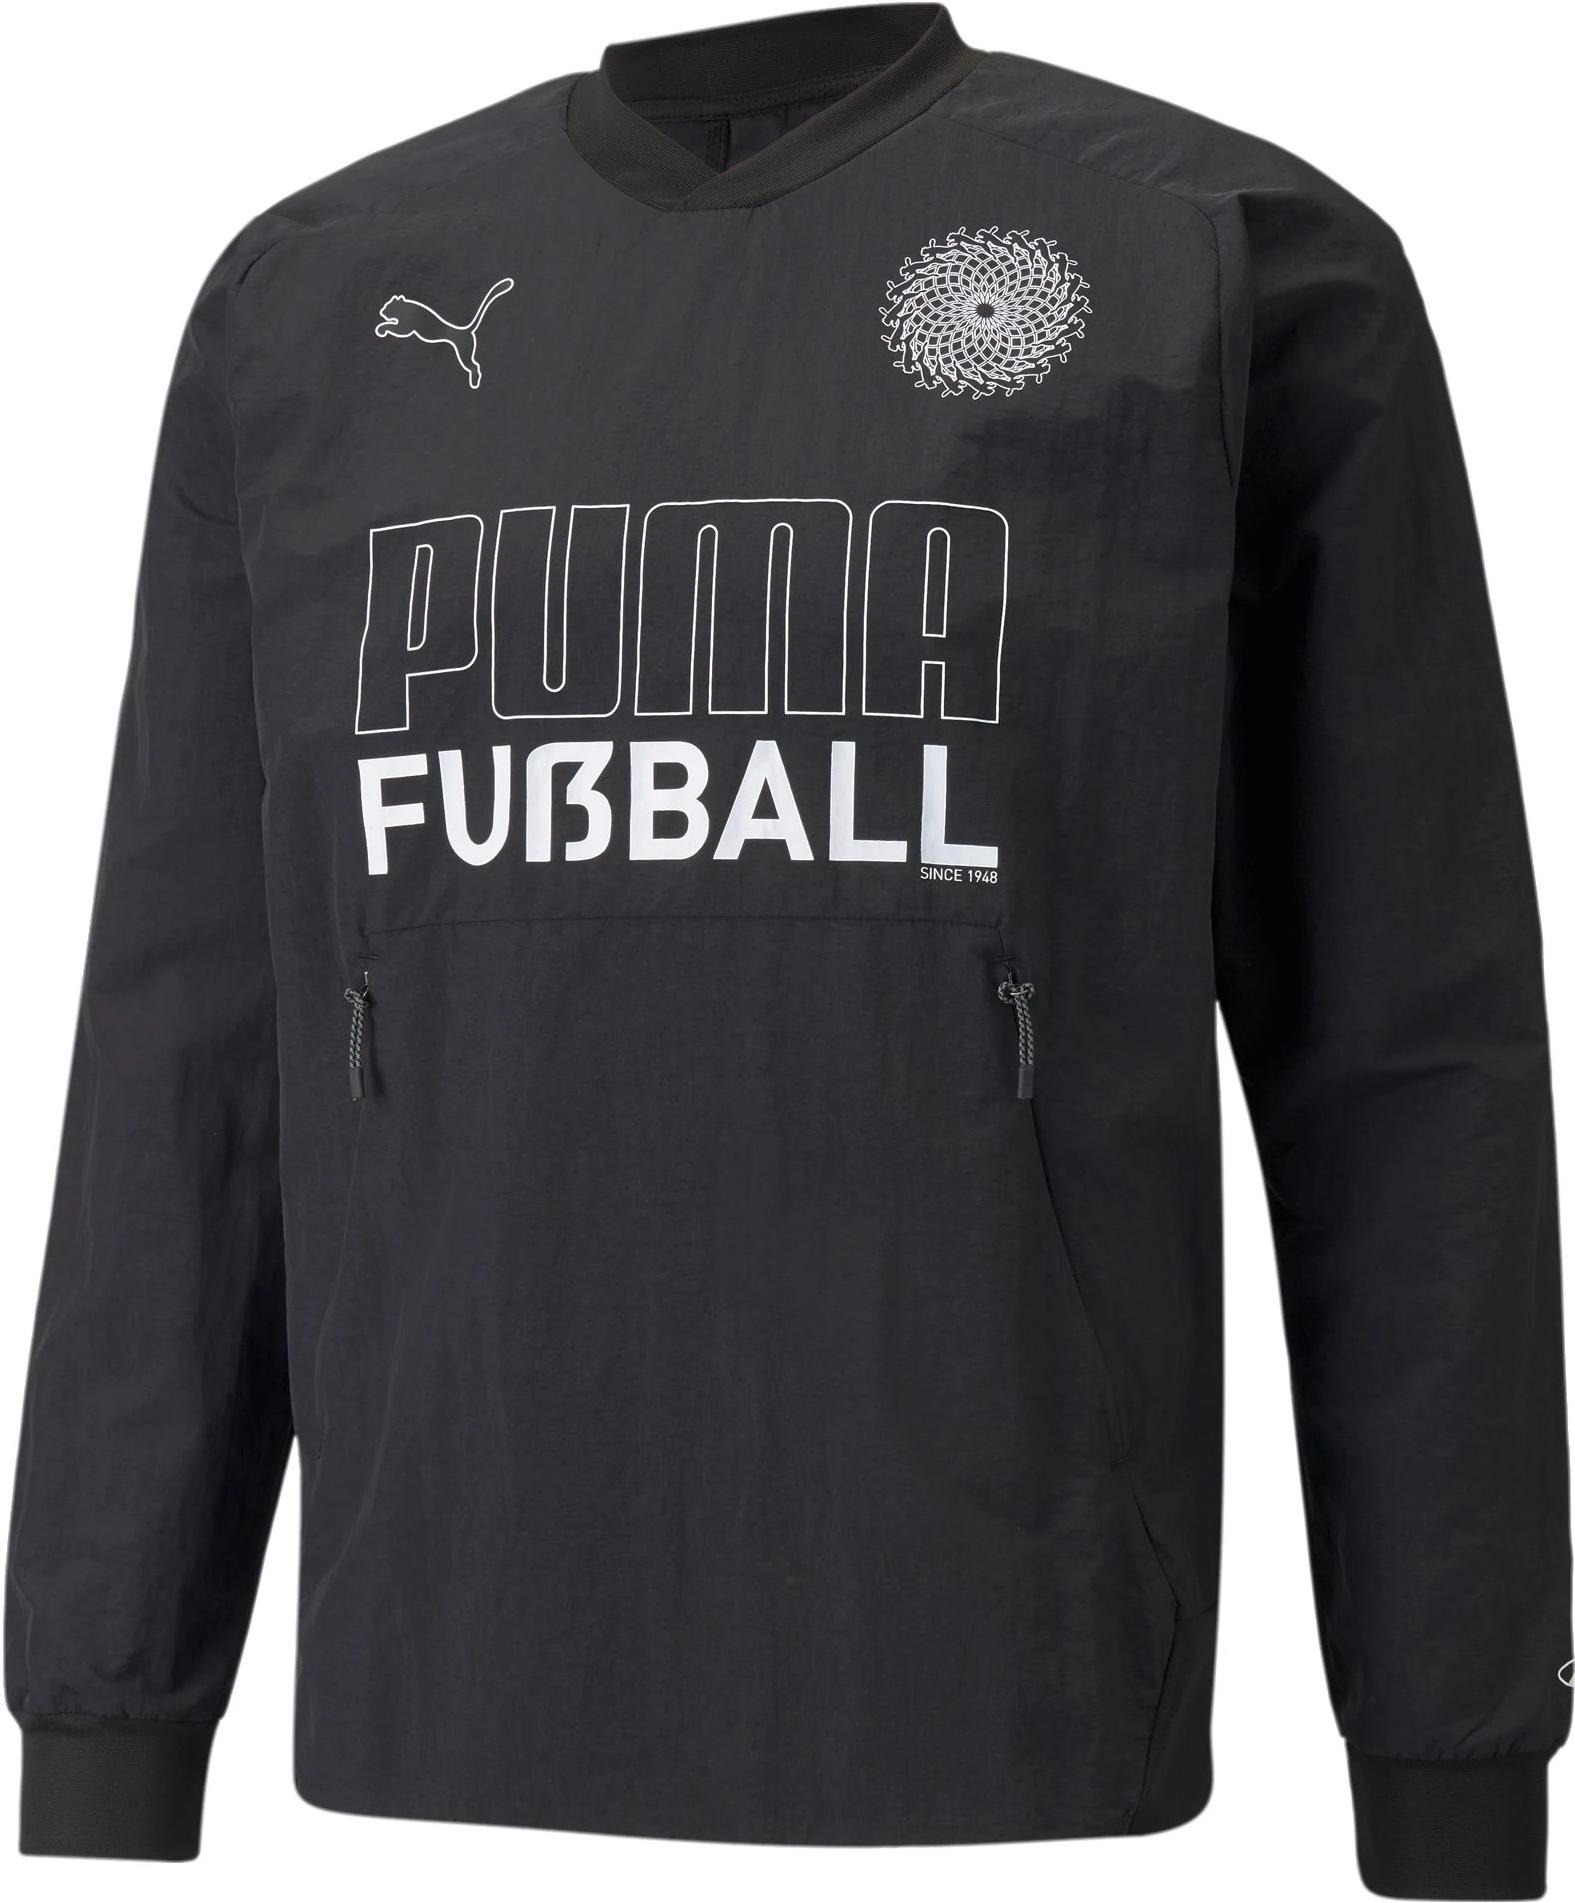 Pánské tréninkové tričko s dlouhým rukávem Puma Fußball King